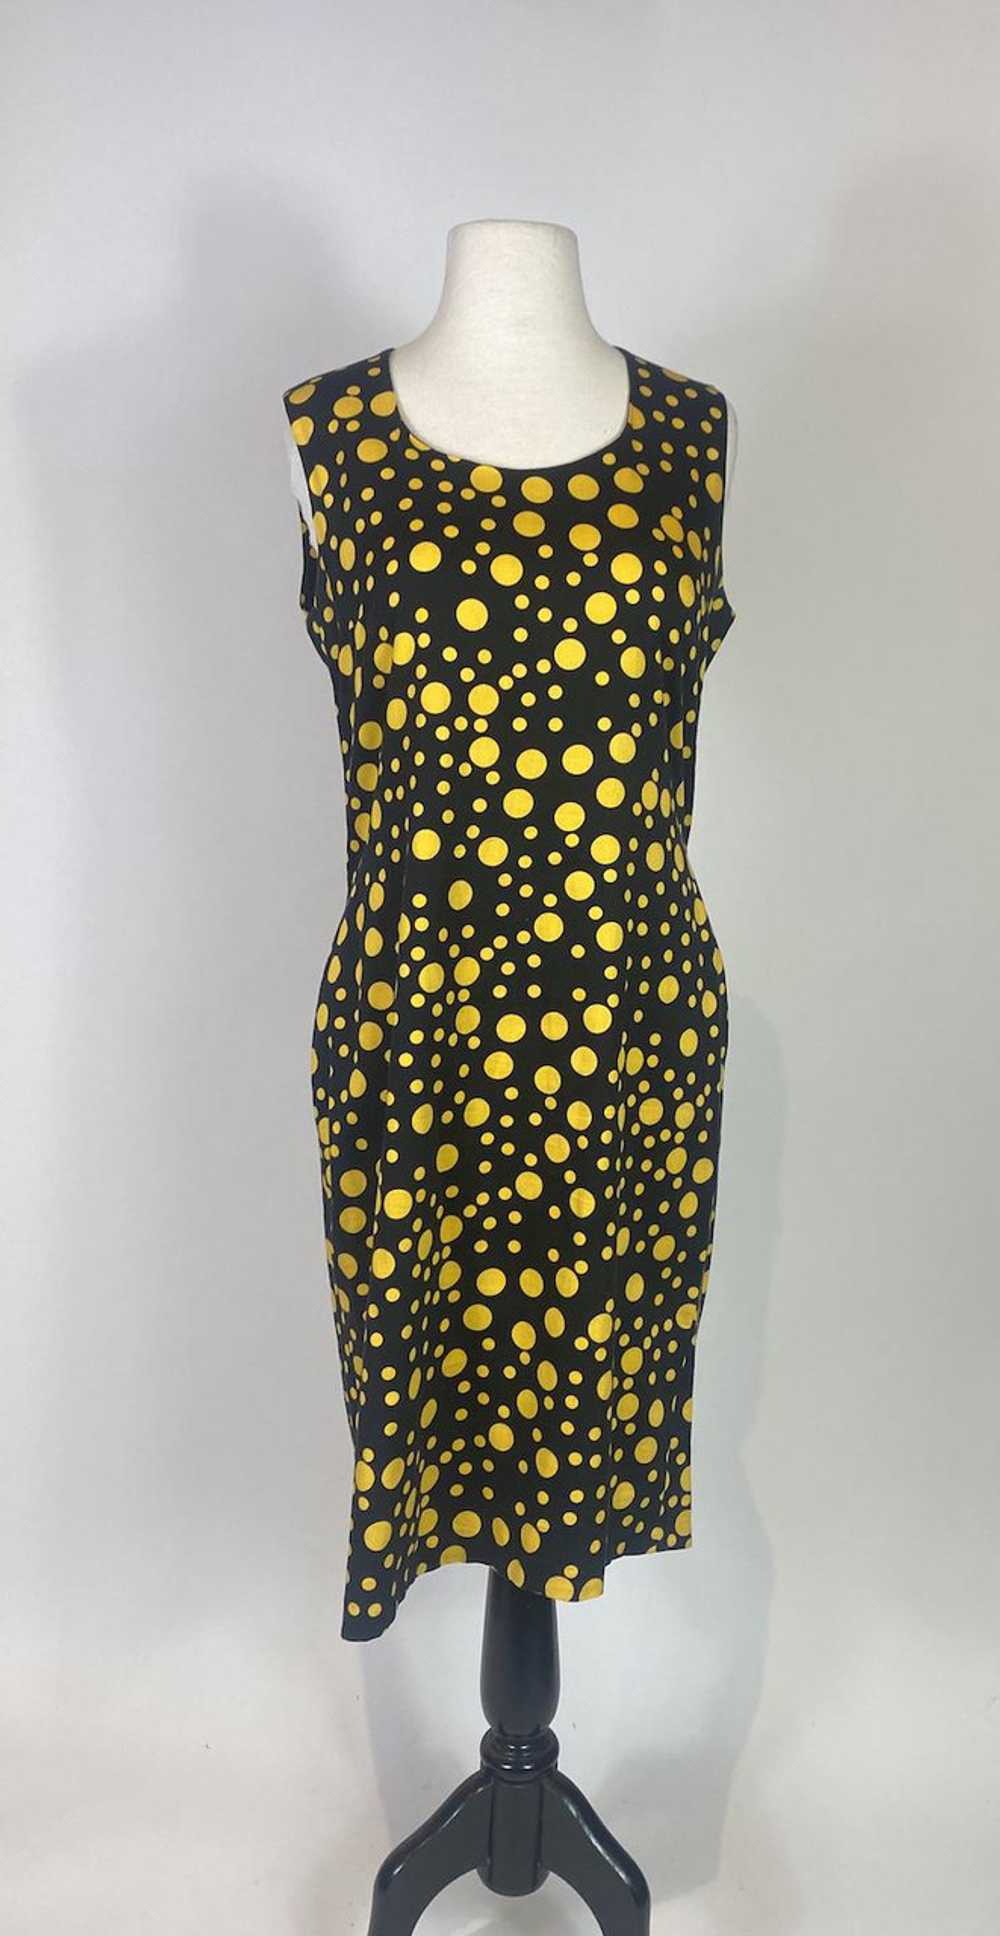 1990s DW3 Polka Dot Yellow and Black Dress - image 1